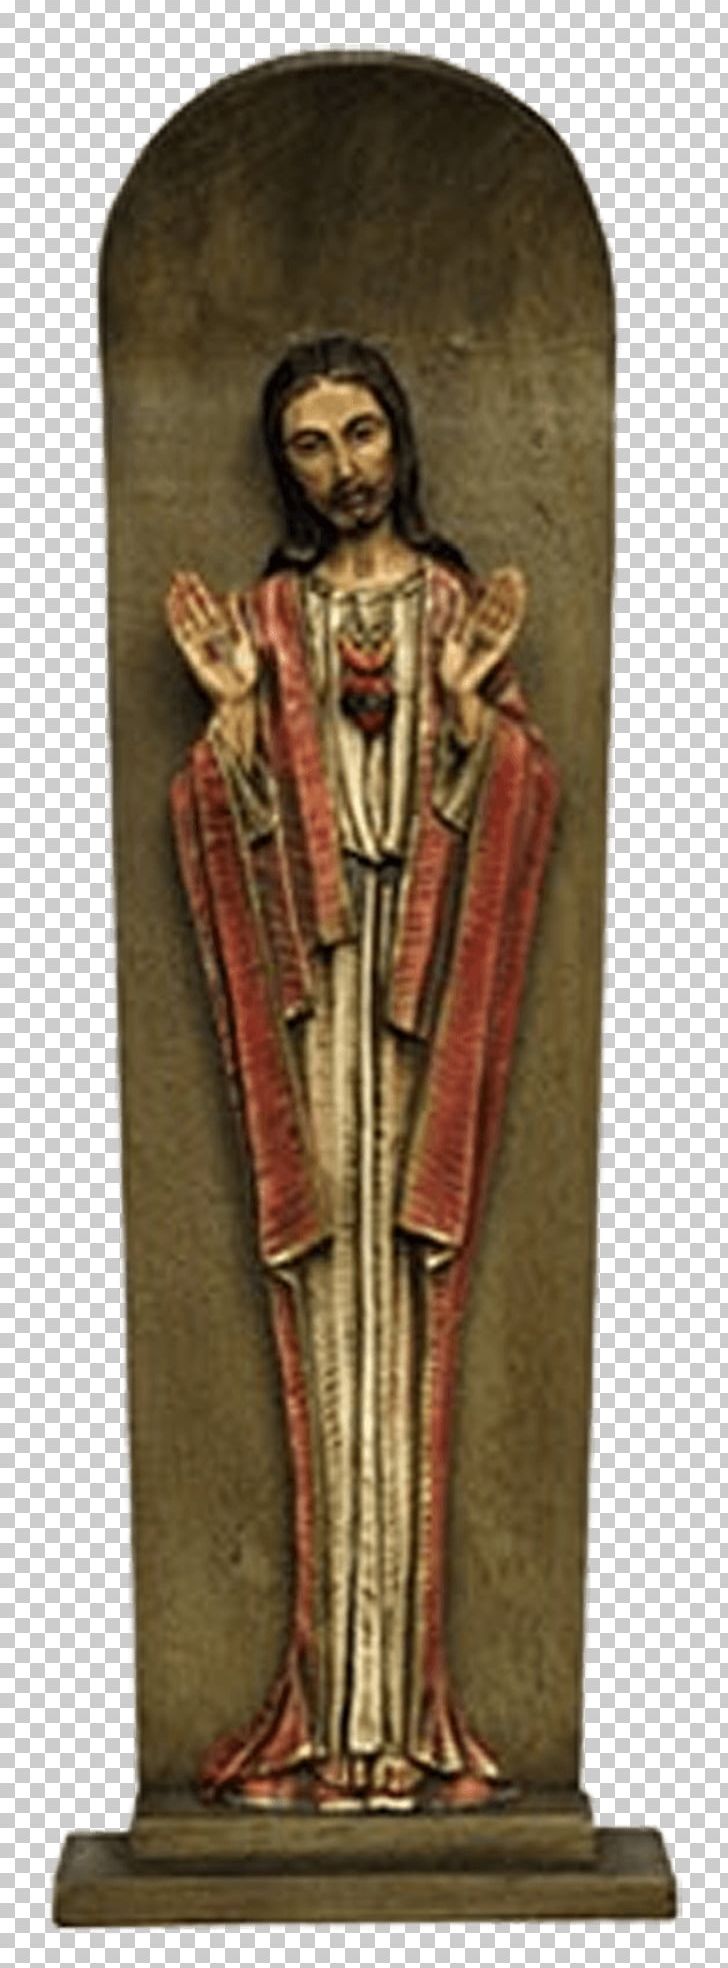 Jesus Middle Ages Statue Classical Sculpture Ancient Greece PNG, Clipart, Ancient Greece, Ancient History, Classical Sculpture, Heart, History Free PNG Download